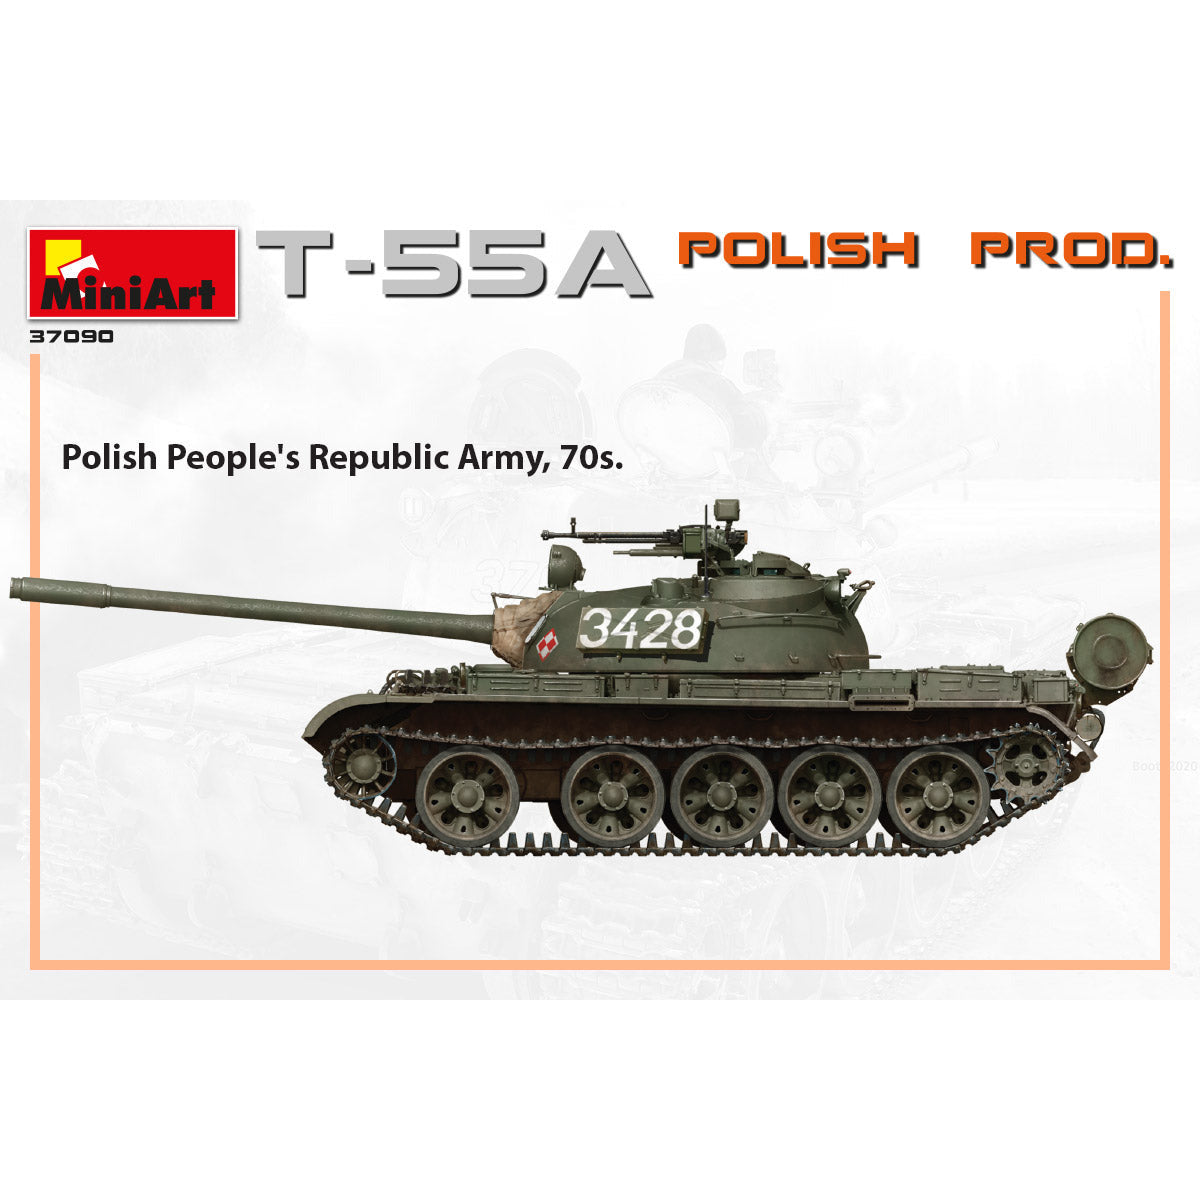 MINIART 1/35 T-55A Polish Production